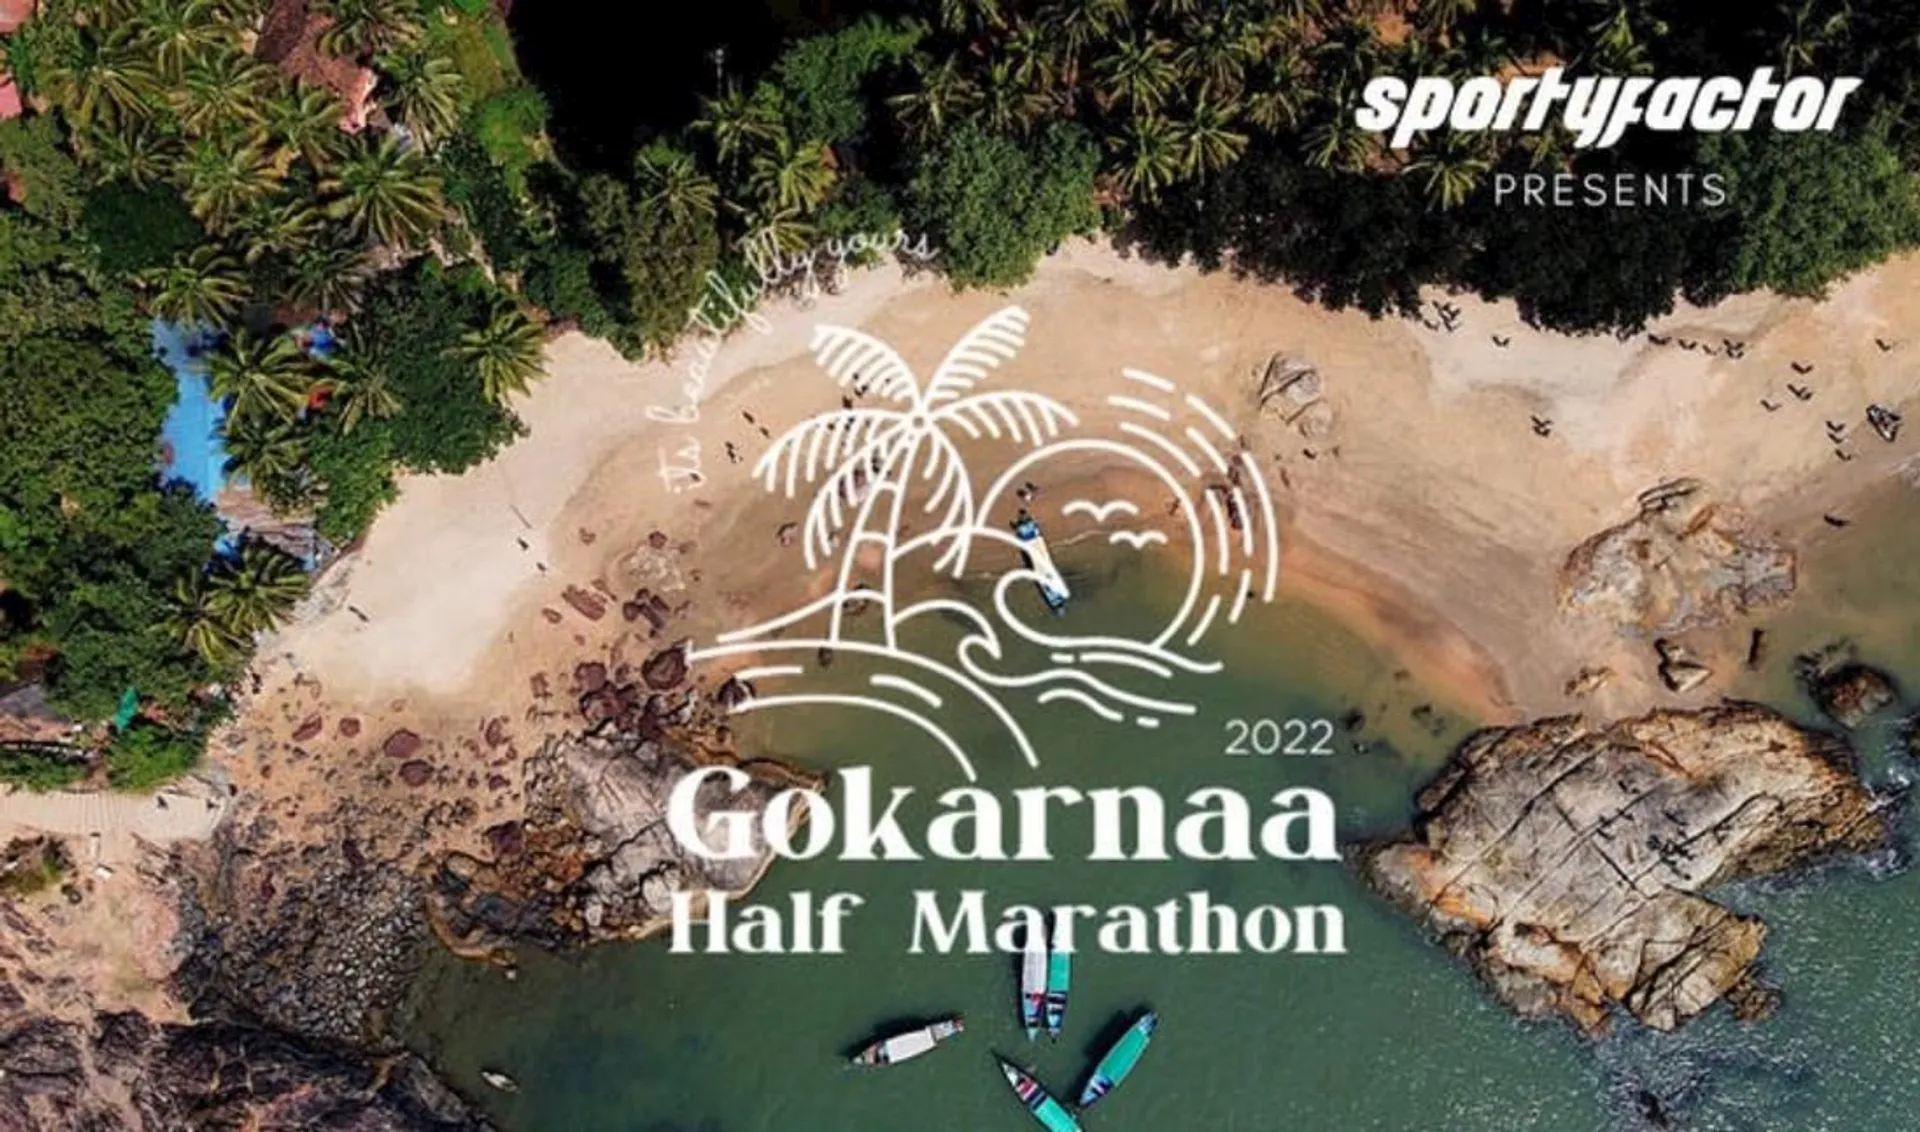 Gokarnaa Half Marathon